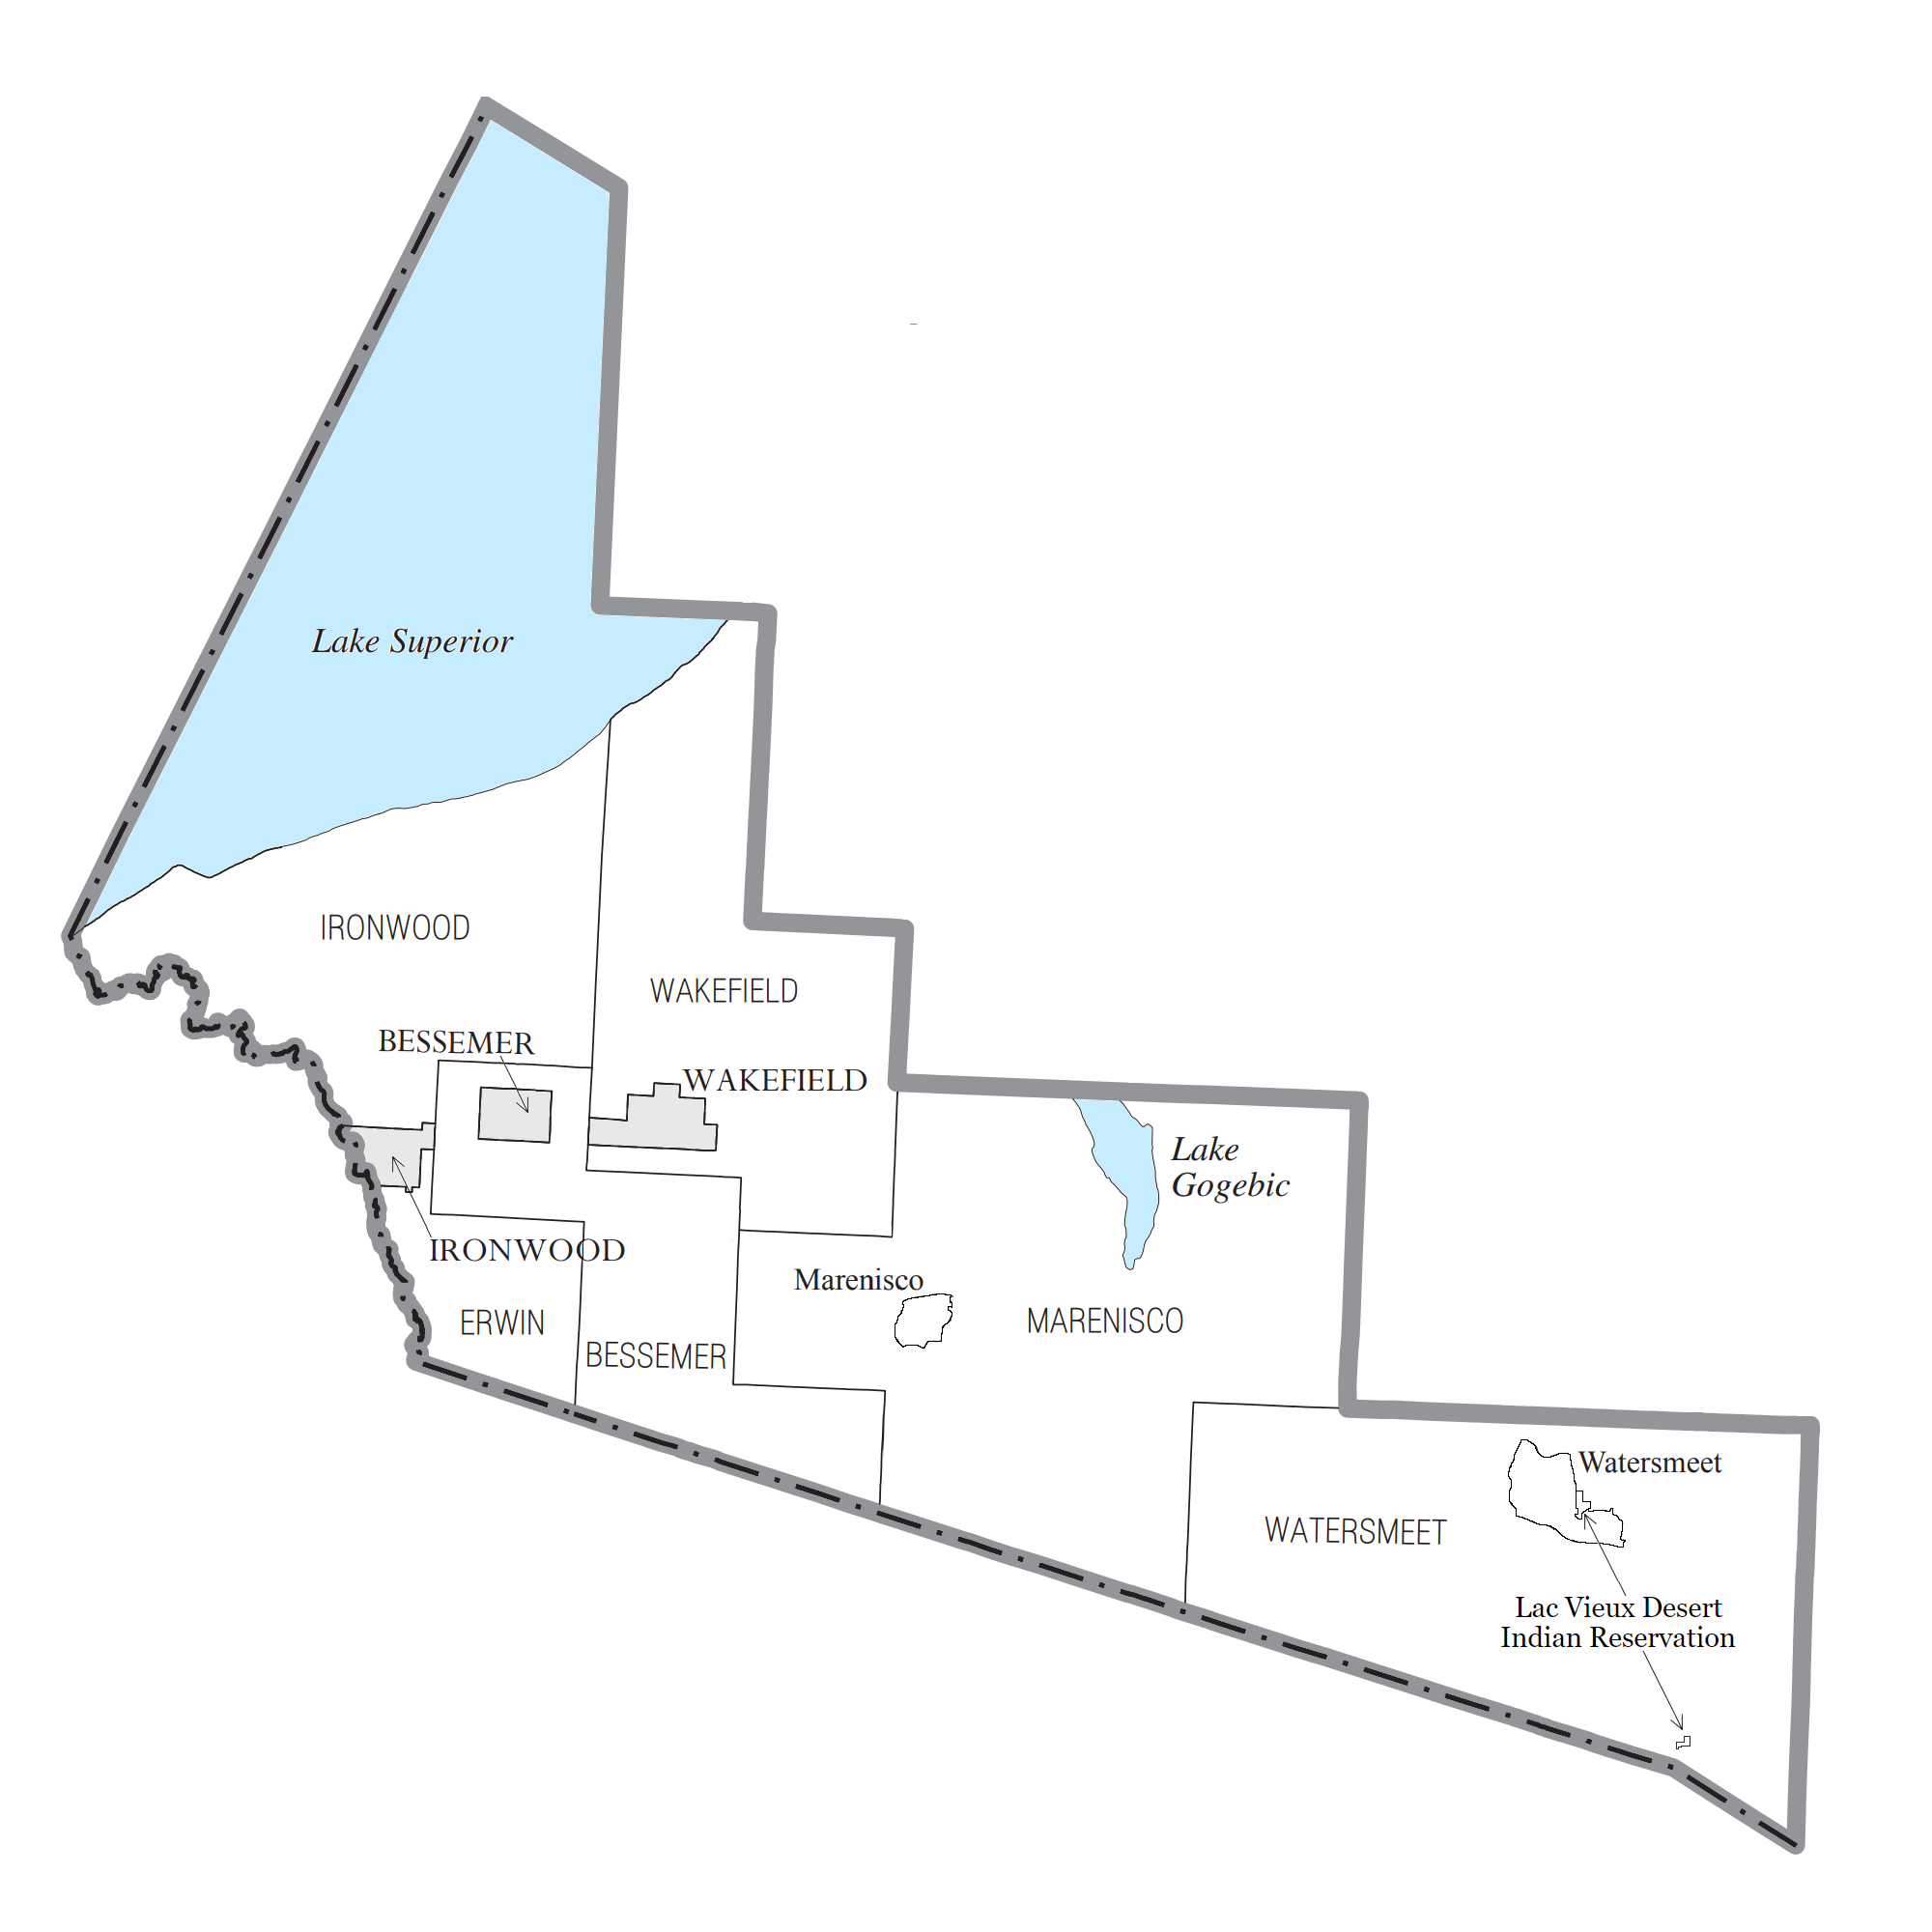  local municipal boundaries within Gogebic County